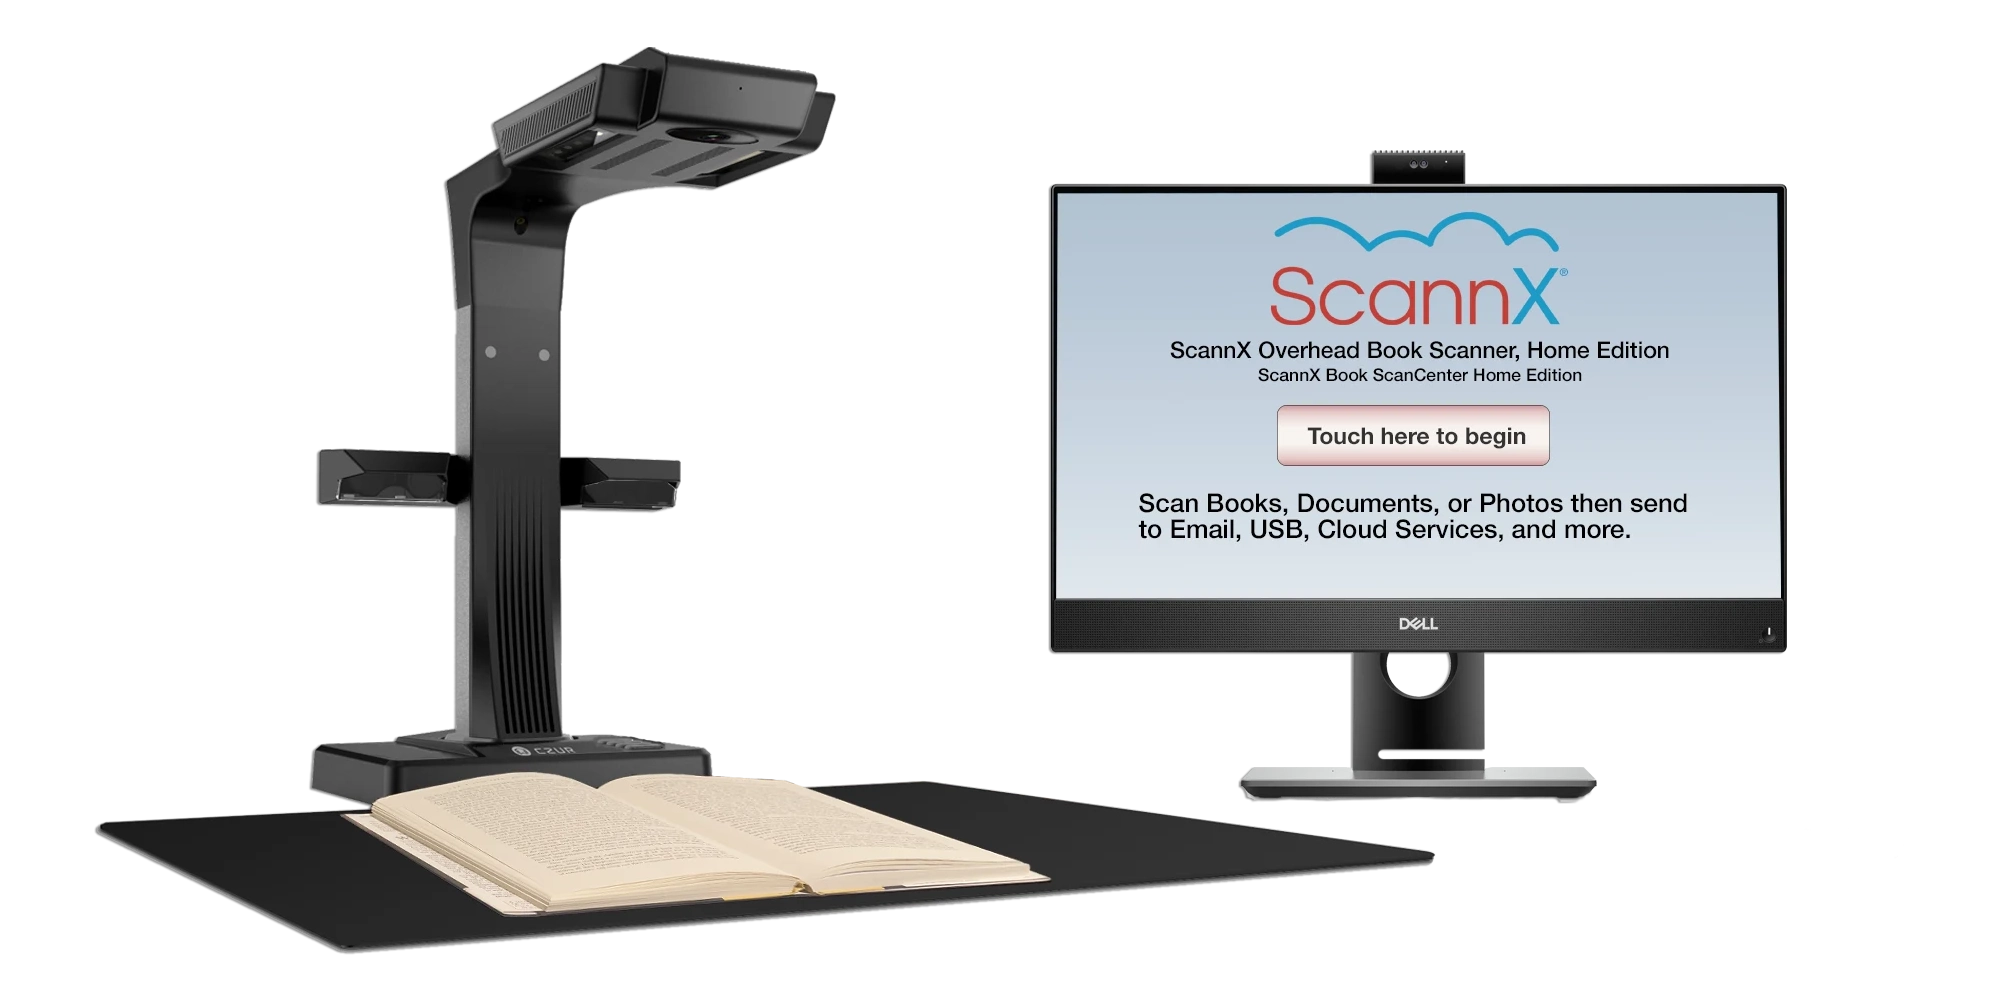 ScannX Overhead Book Scanner, Home Edition